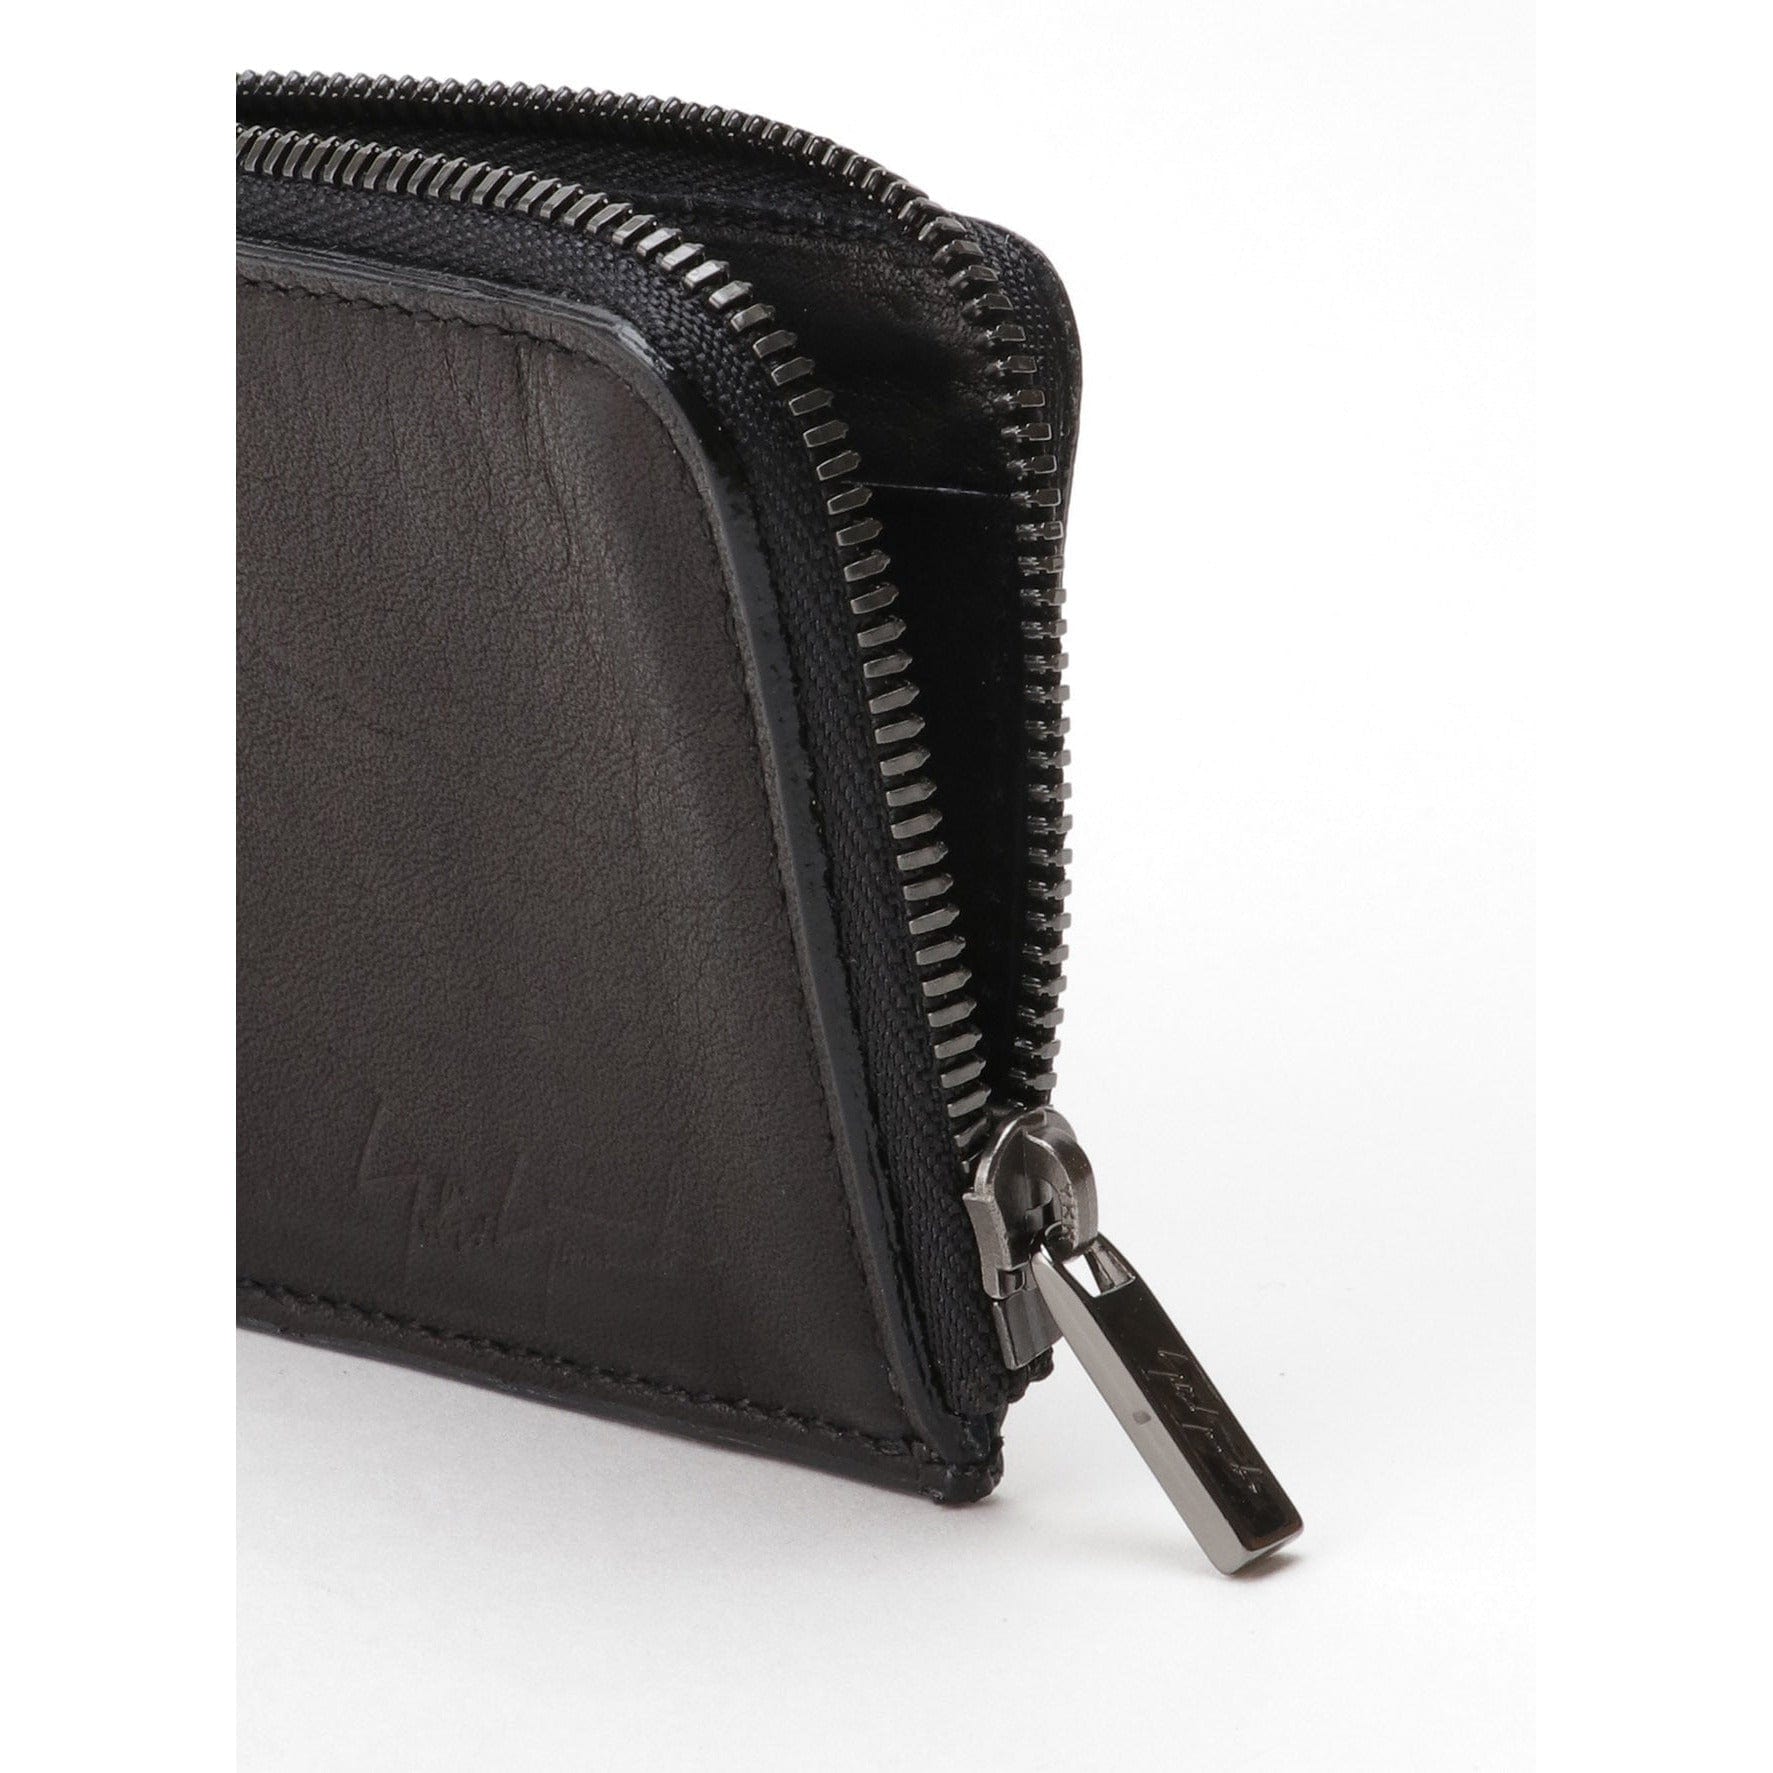 Yohji Yamamoto Wallets & Money Clips 7.5cm x 12.5cm x 1.5cm / Black / Cow Leather Yohji Yamamoto Mini Card Wallet